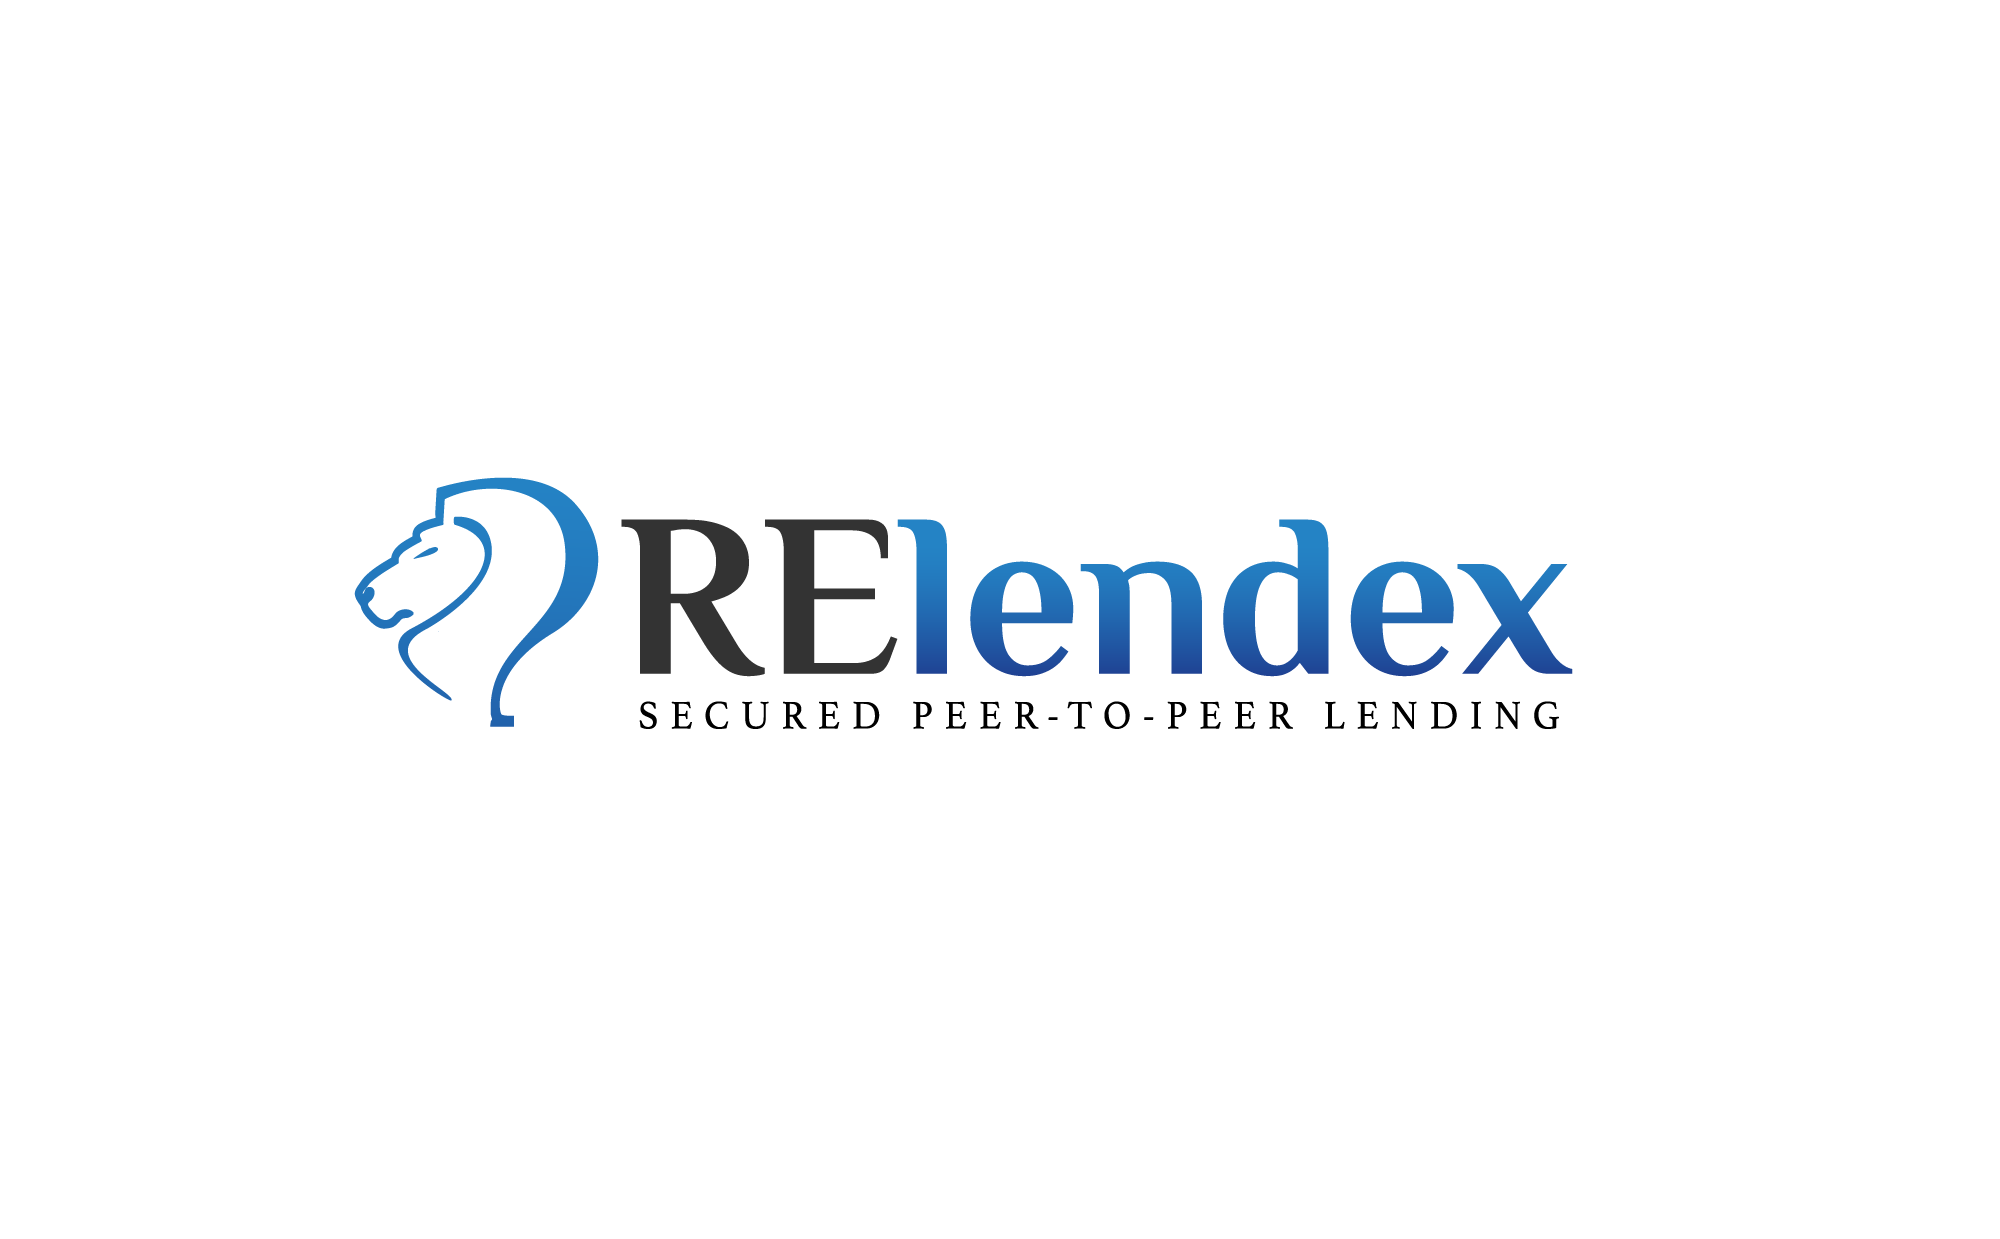 relendex-logos-in-color.png